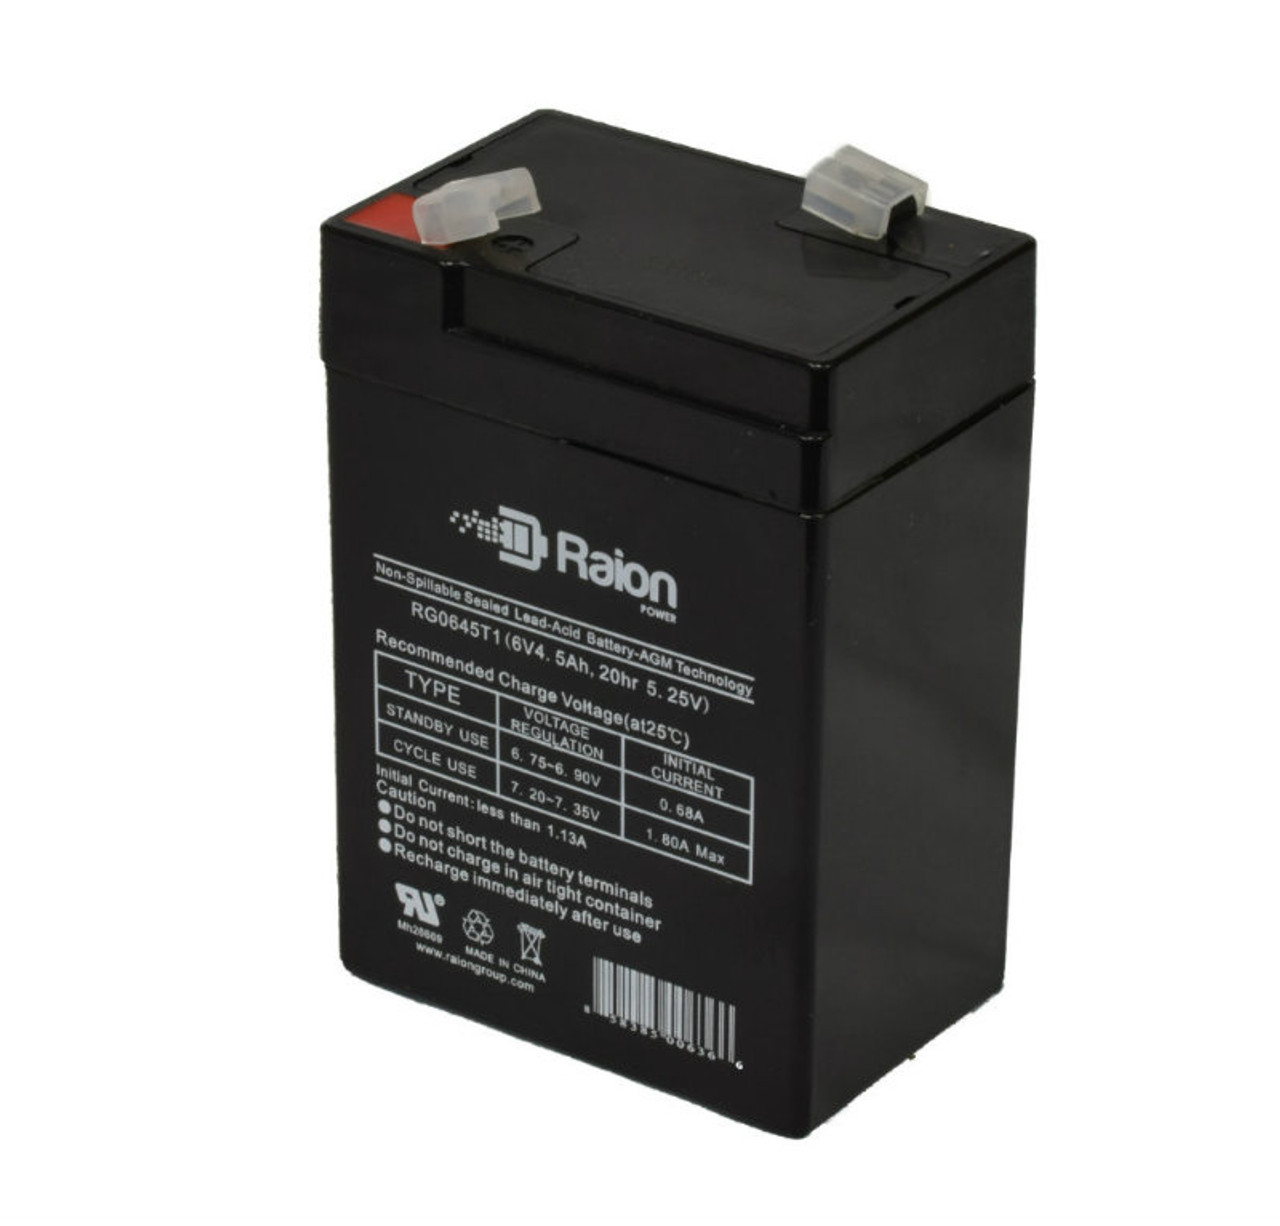 Raion Power RG0645T1 6V 4.5Ah Replacement Battery Cartridge for SigmasTek SP6-6